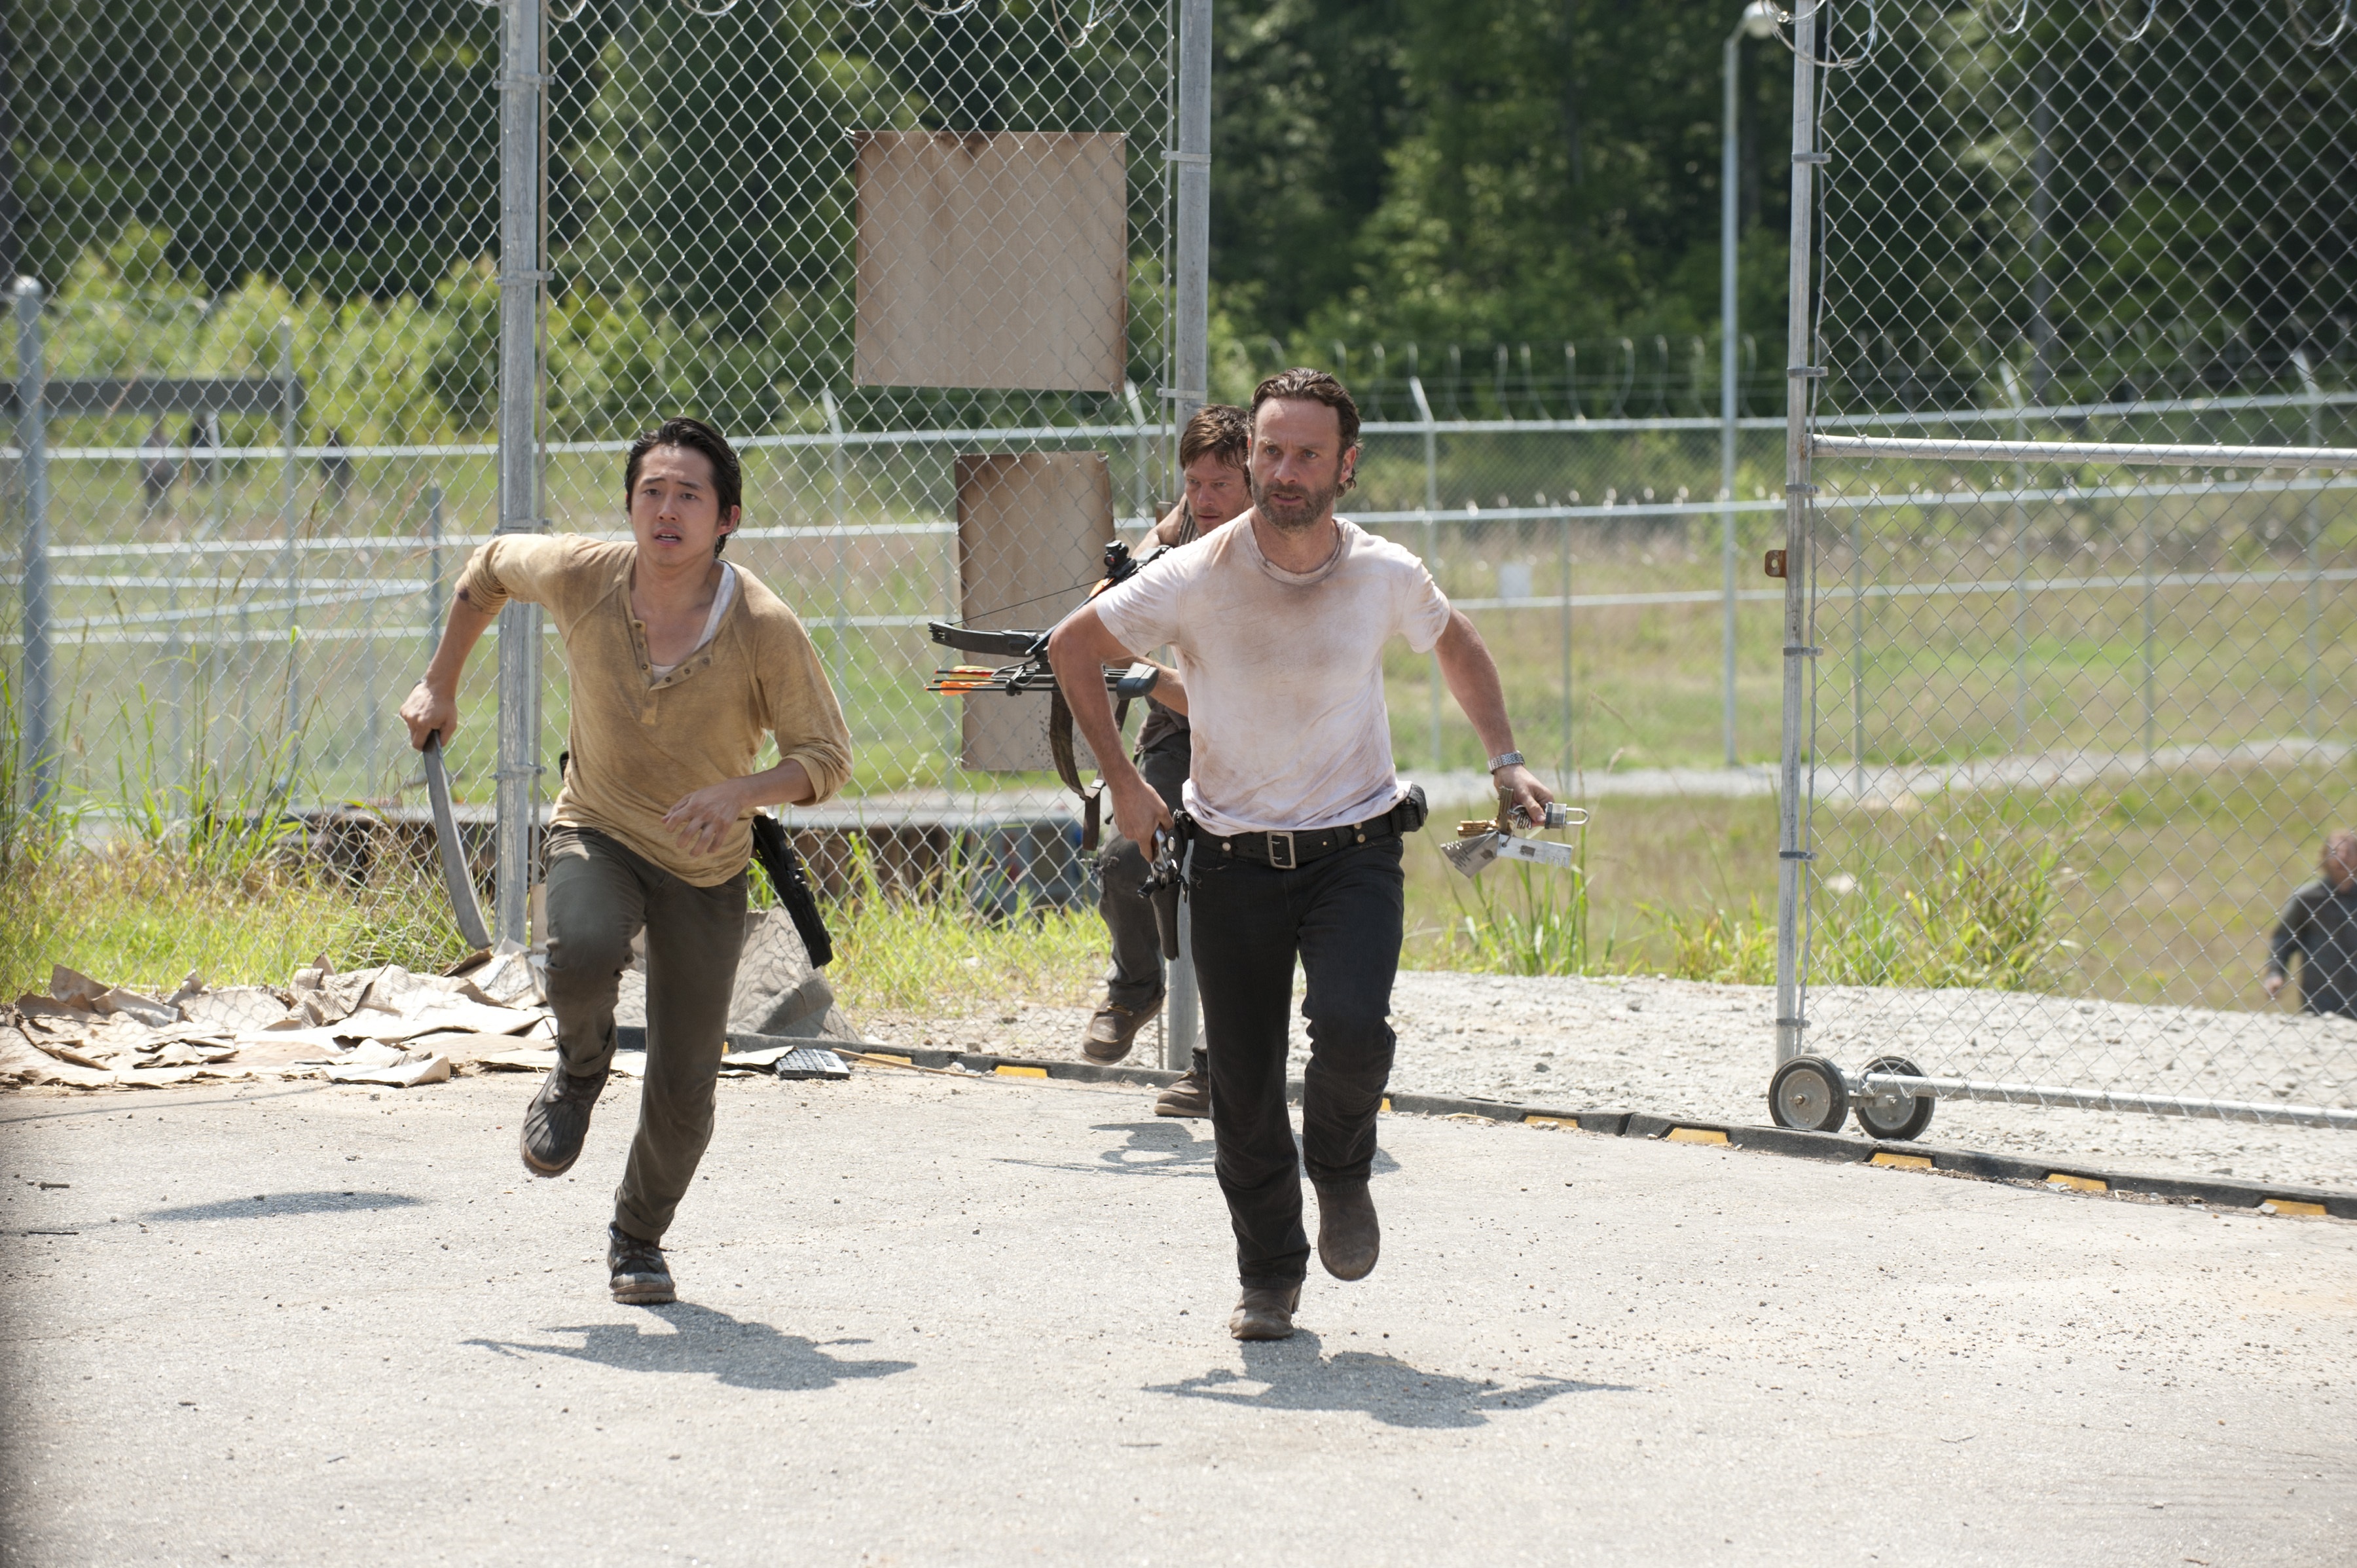 La AMC anuncia el spin-off de »The Walking Dead»